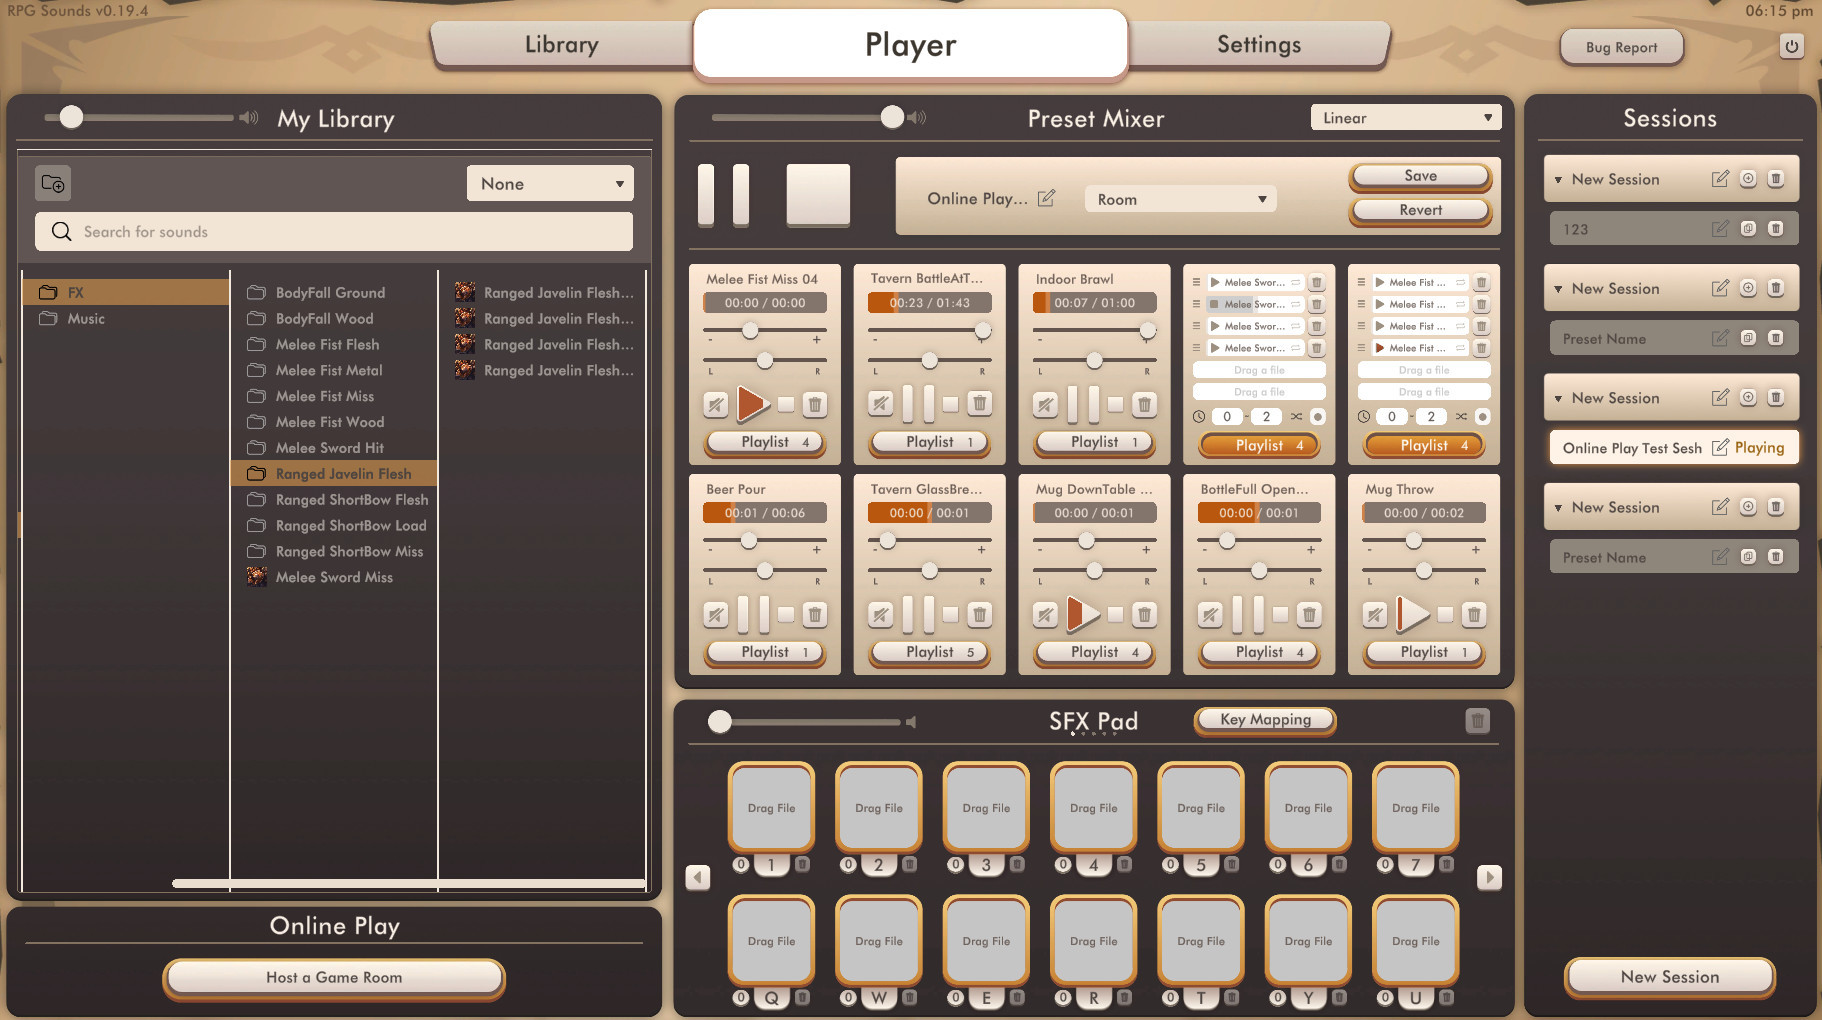 RPG Sounds - Uru'Can Tribe - Sound Pack screenshot